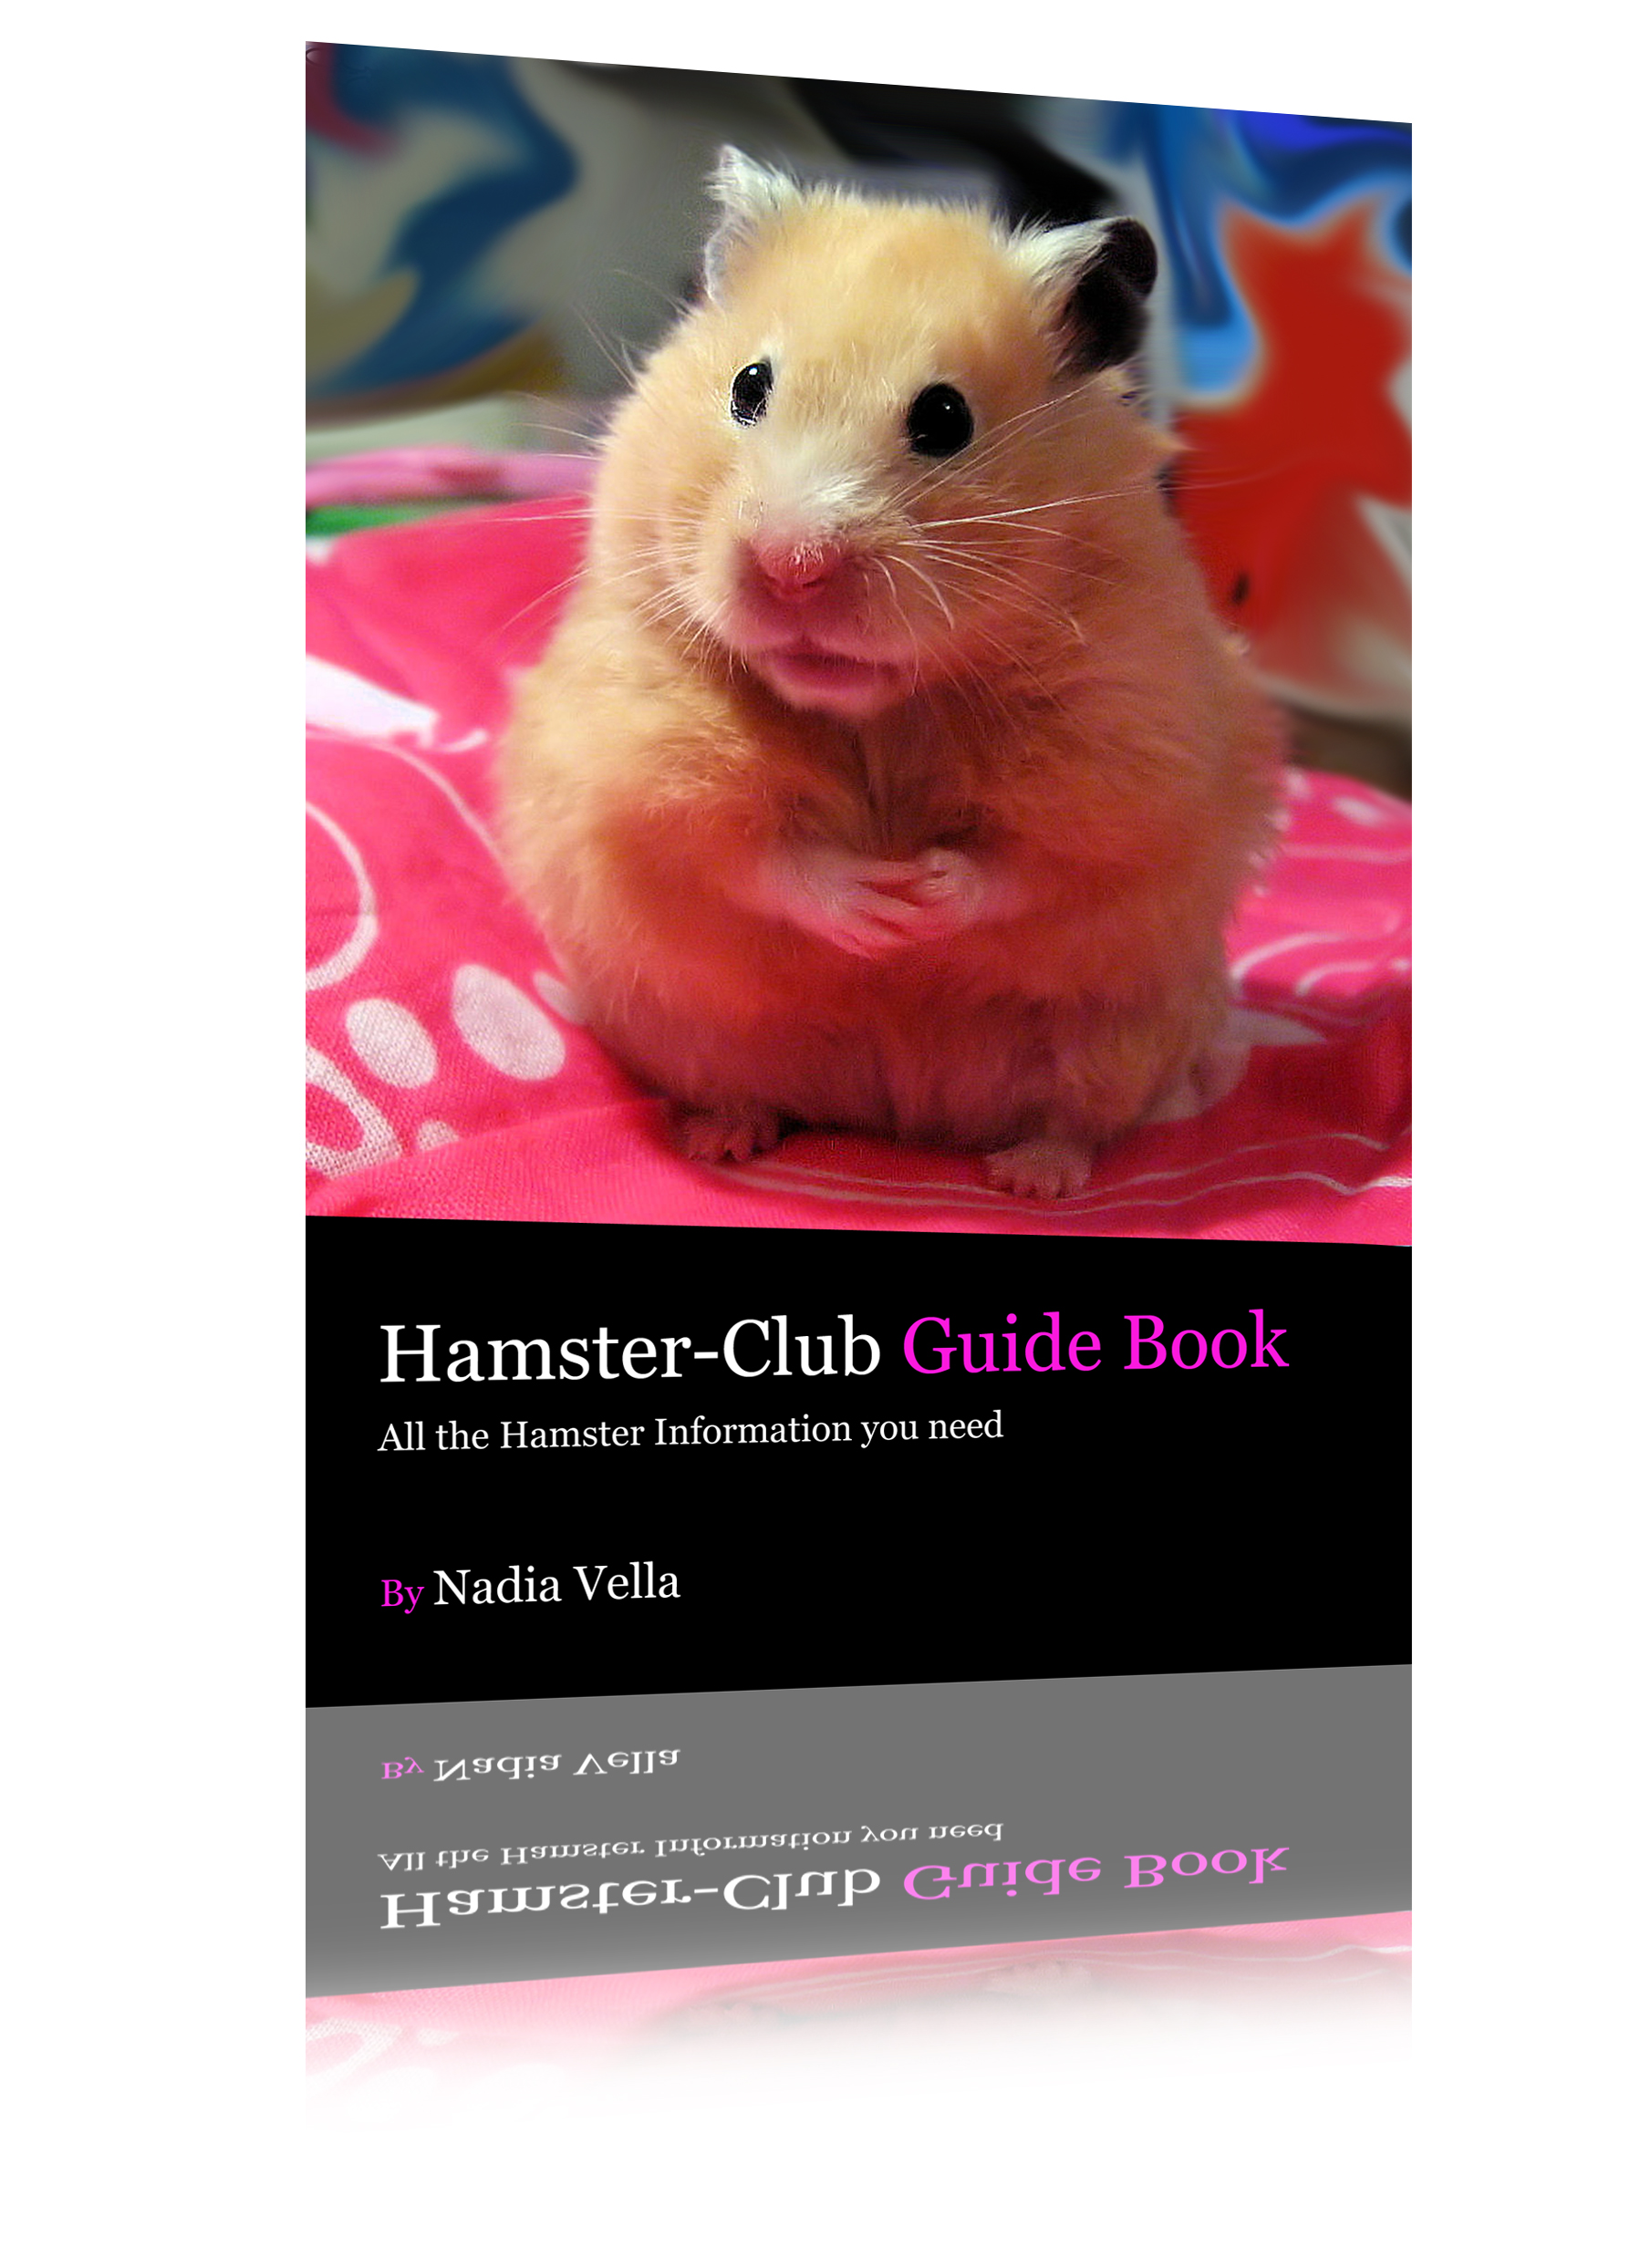 Hamster-Club Guide Book